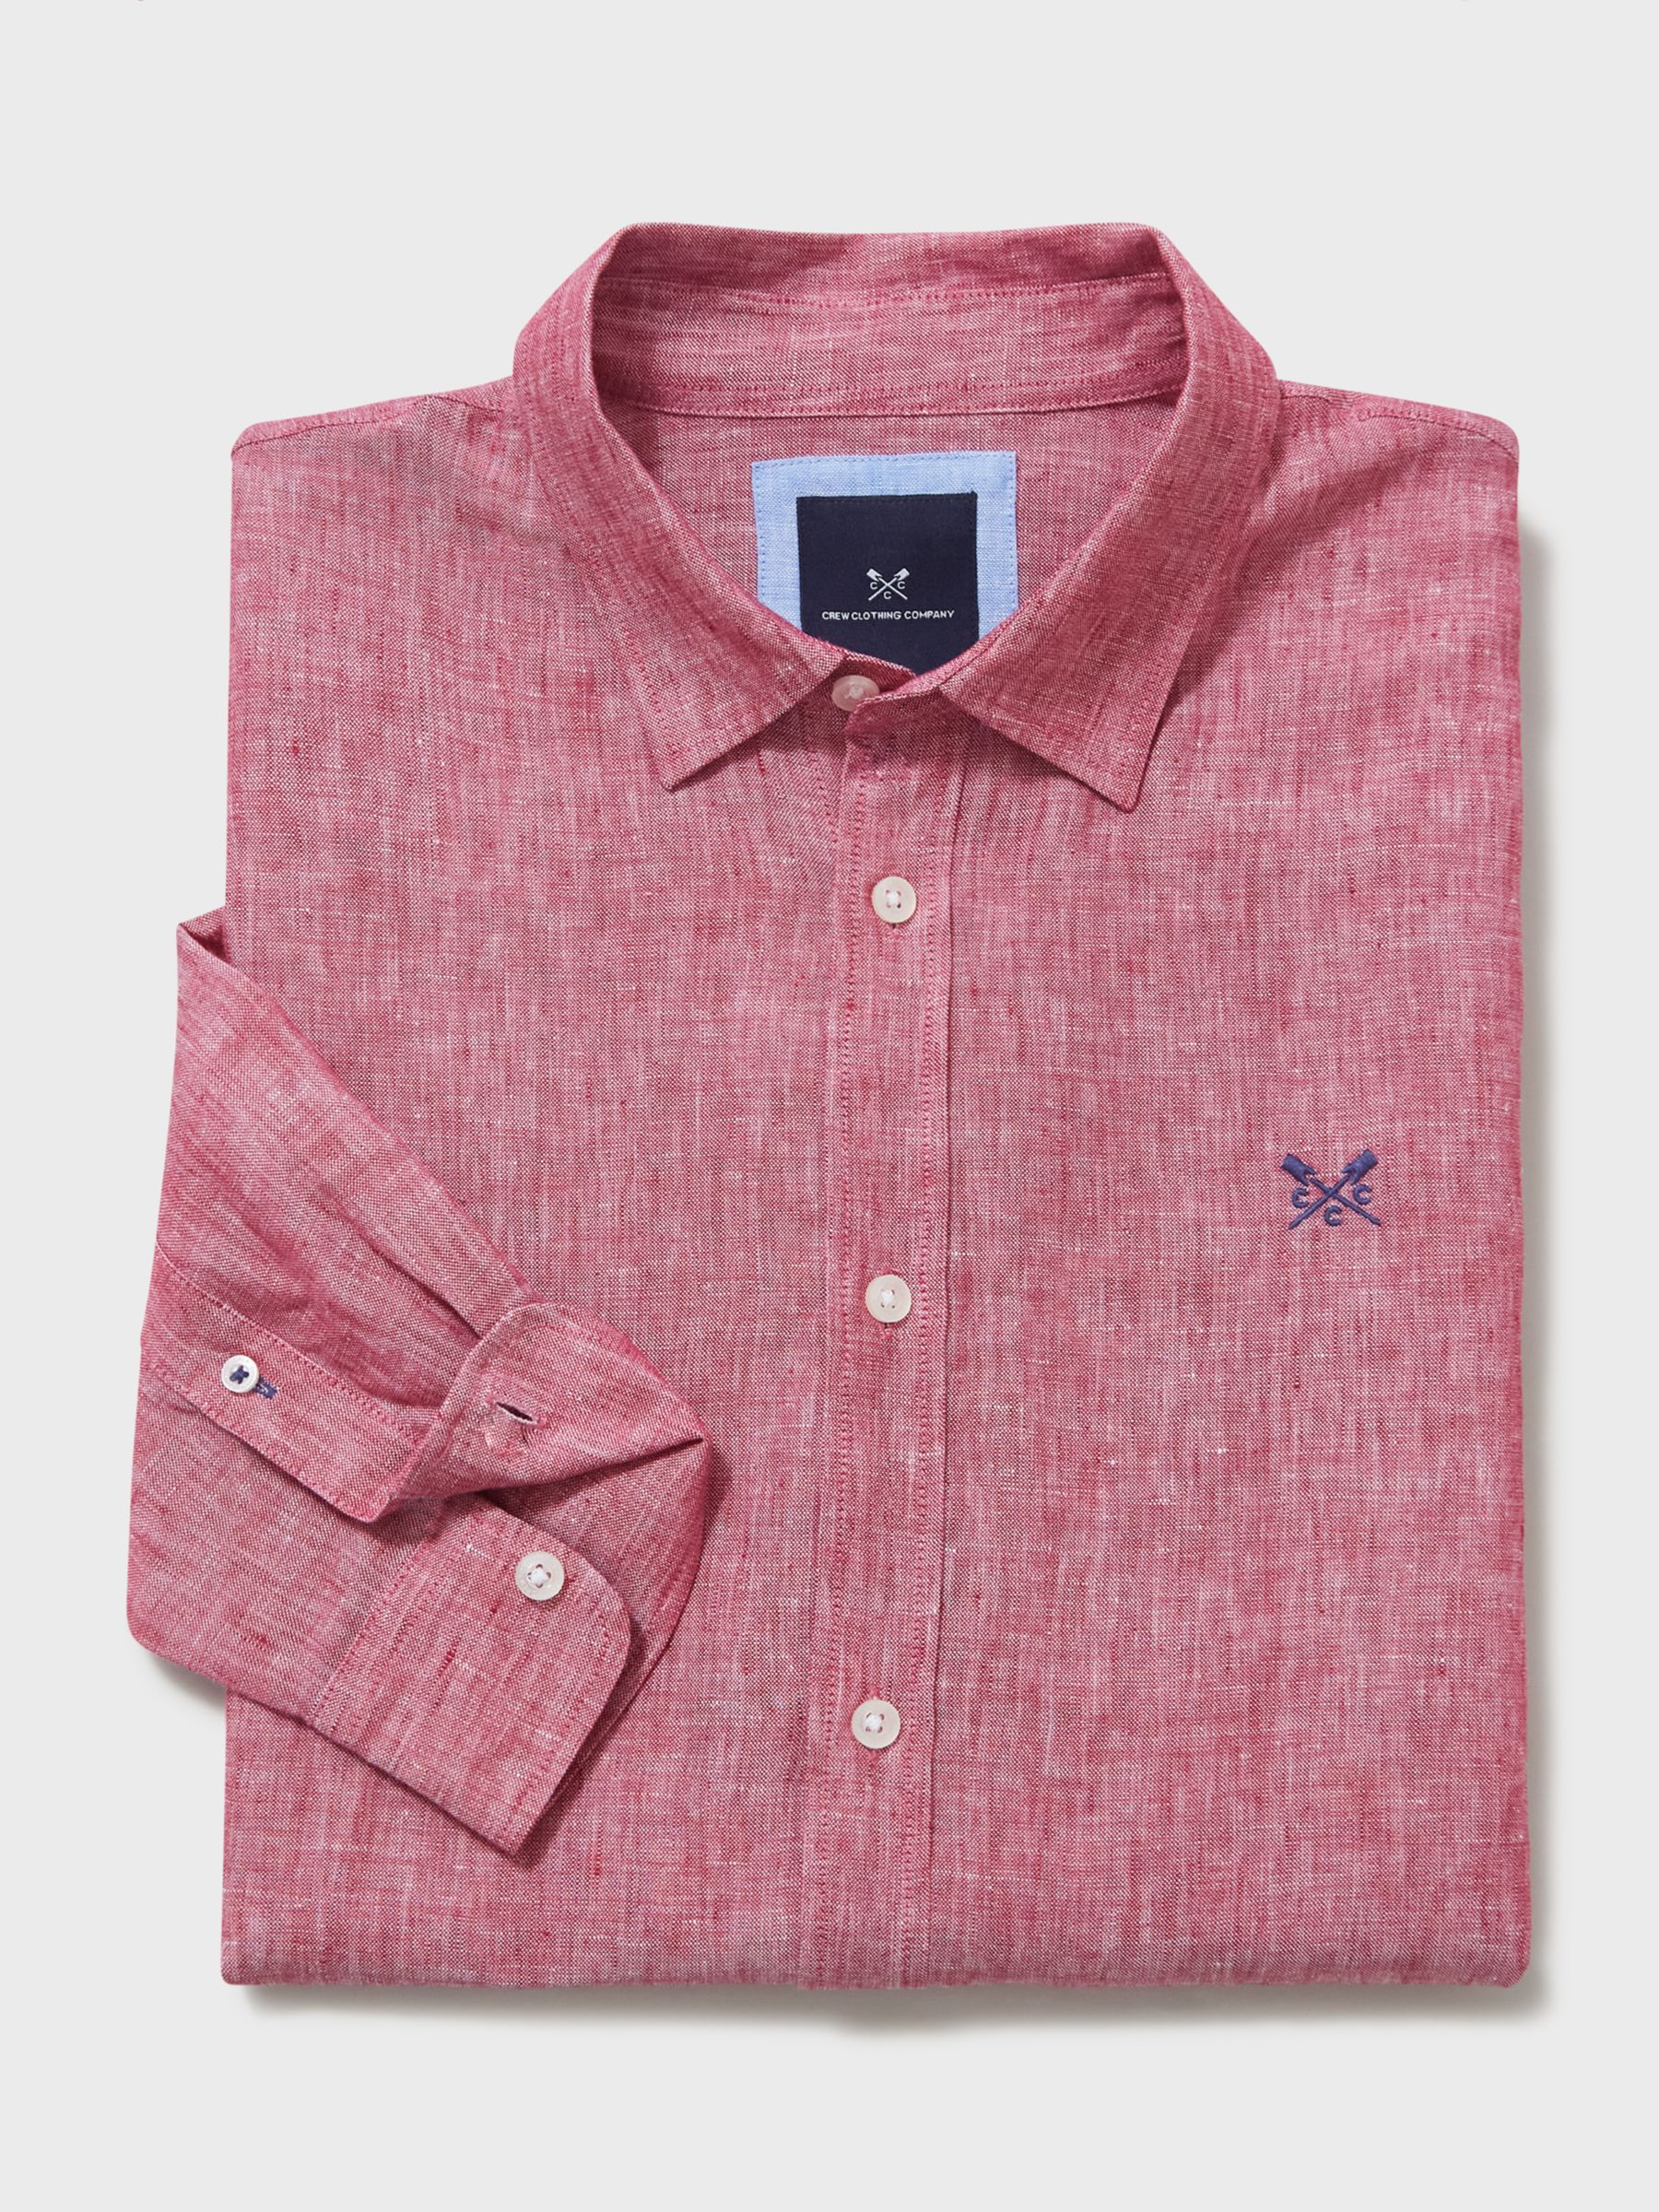 Crew Clothing Long Sleeve Linen Shirt, Dark Pink at John Lewis & Partners